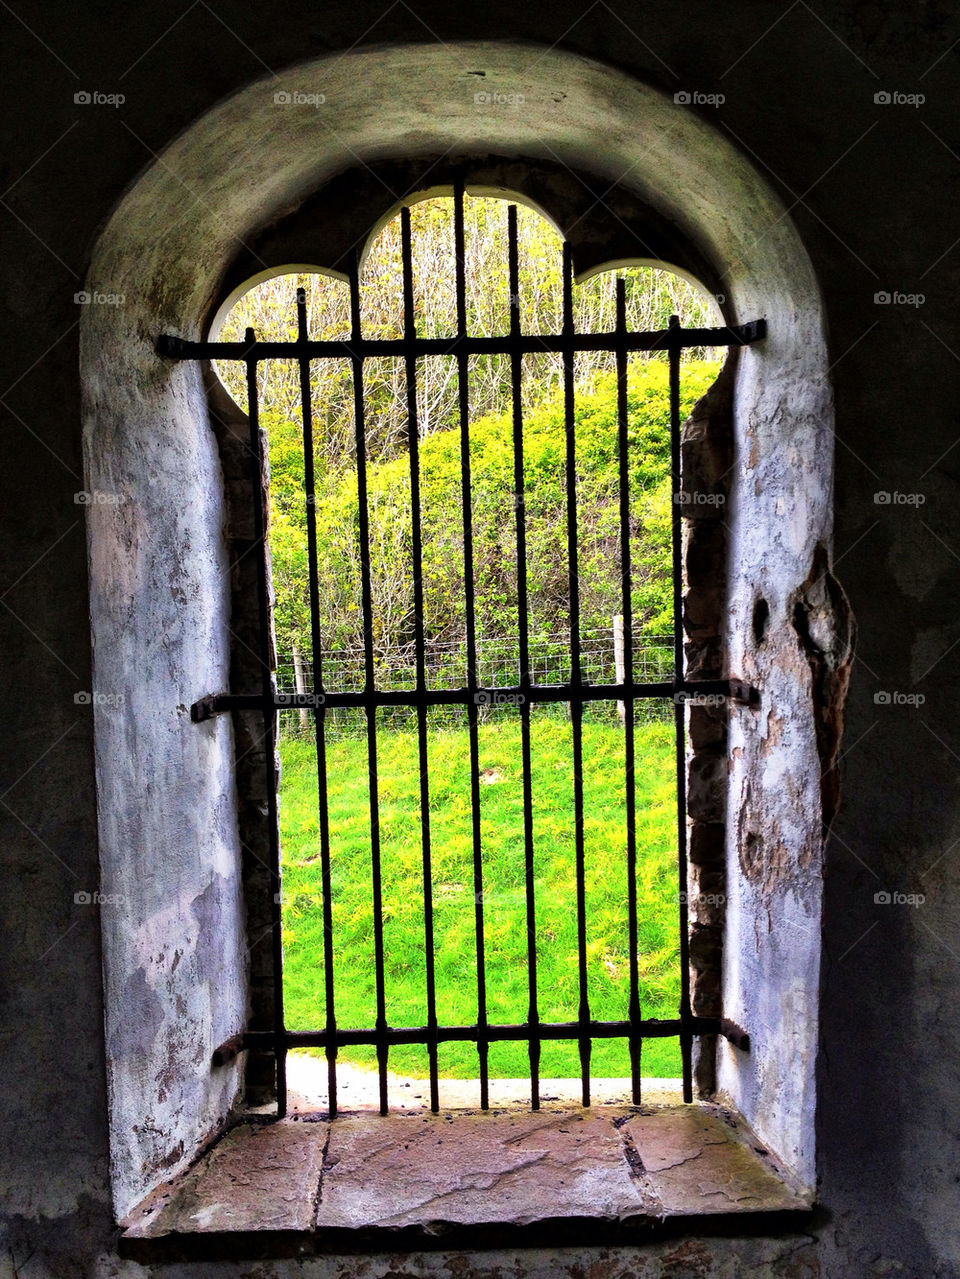 united kingdom iron bars window by theloudsilence